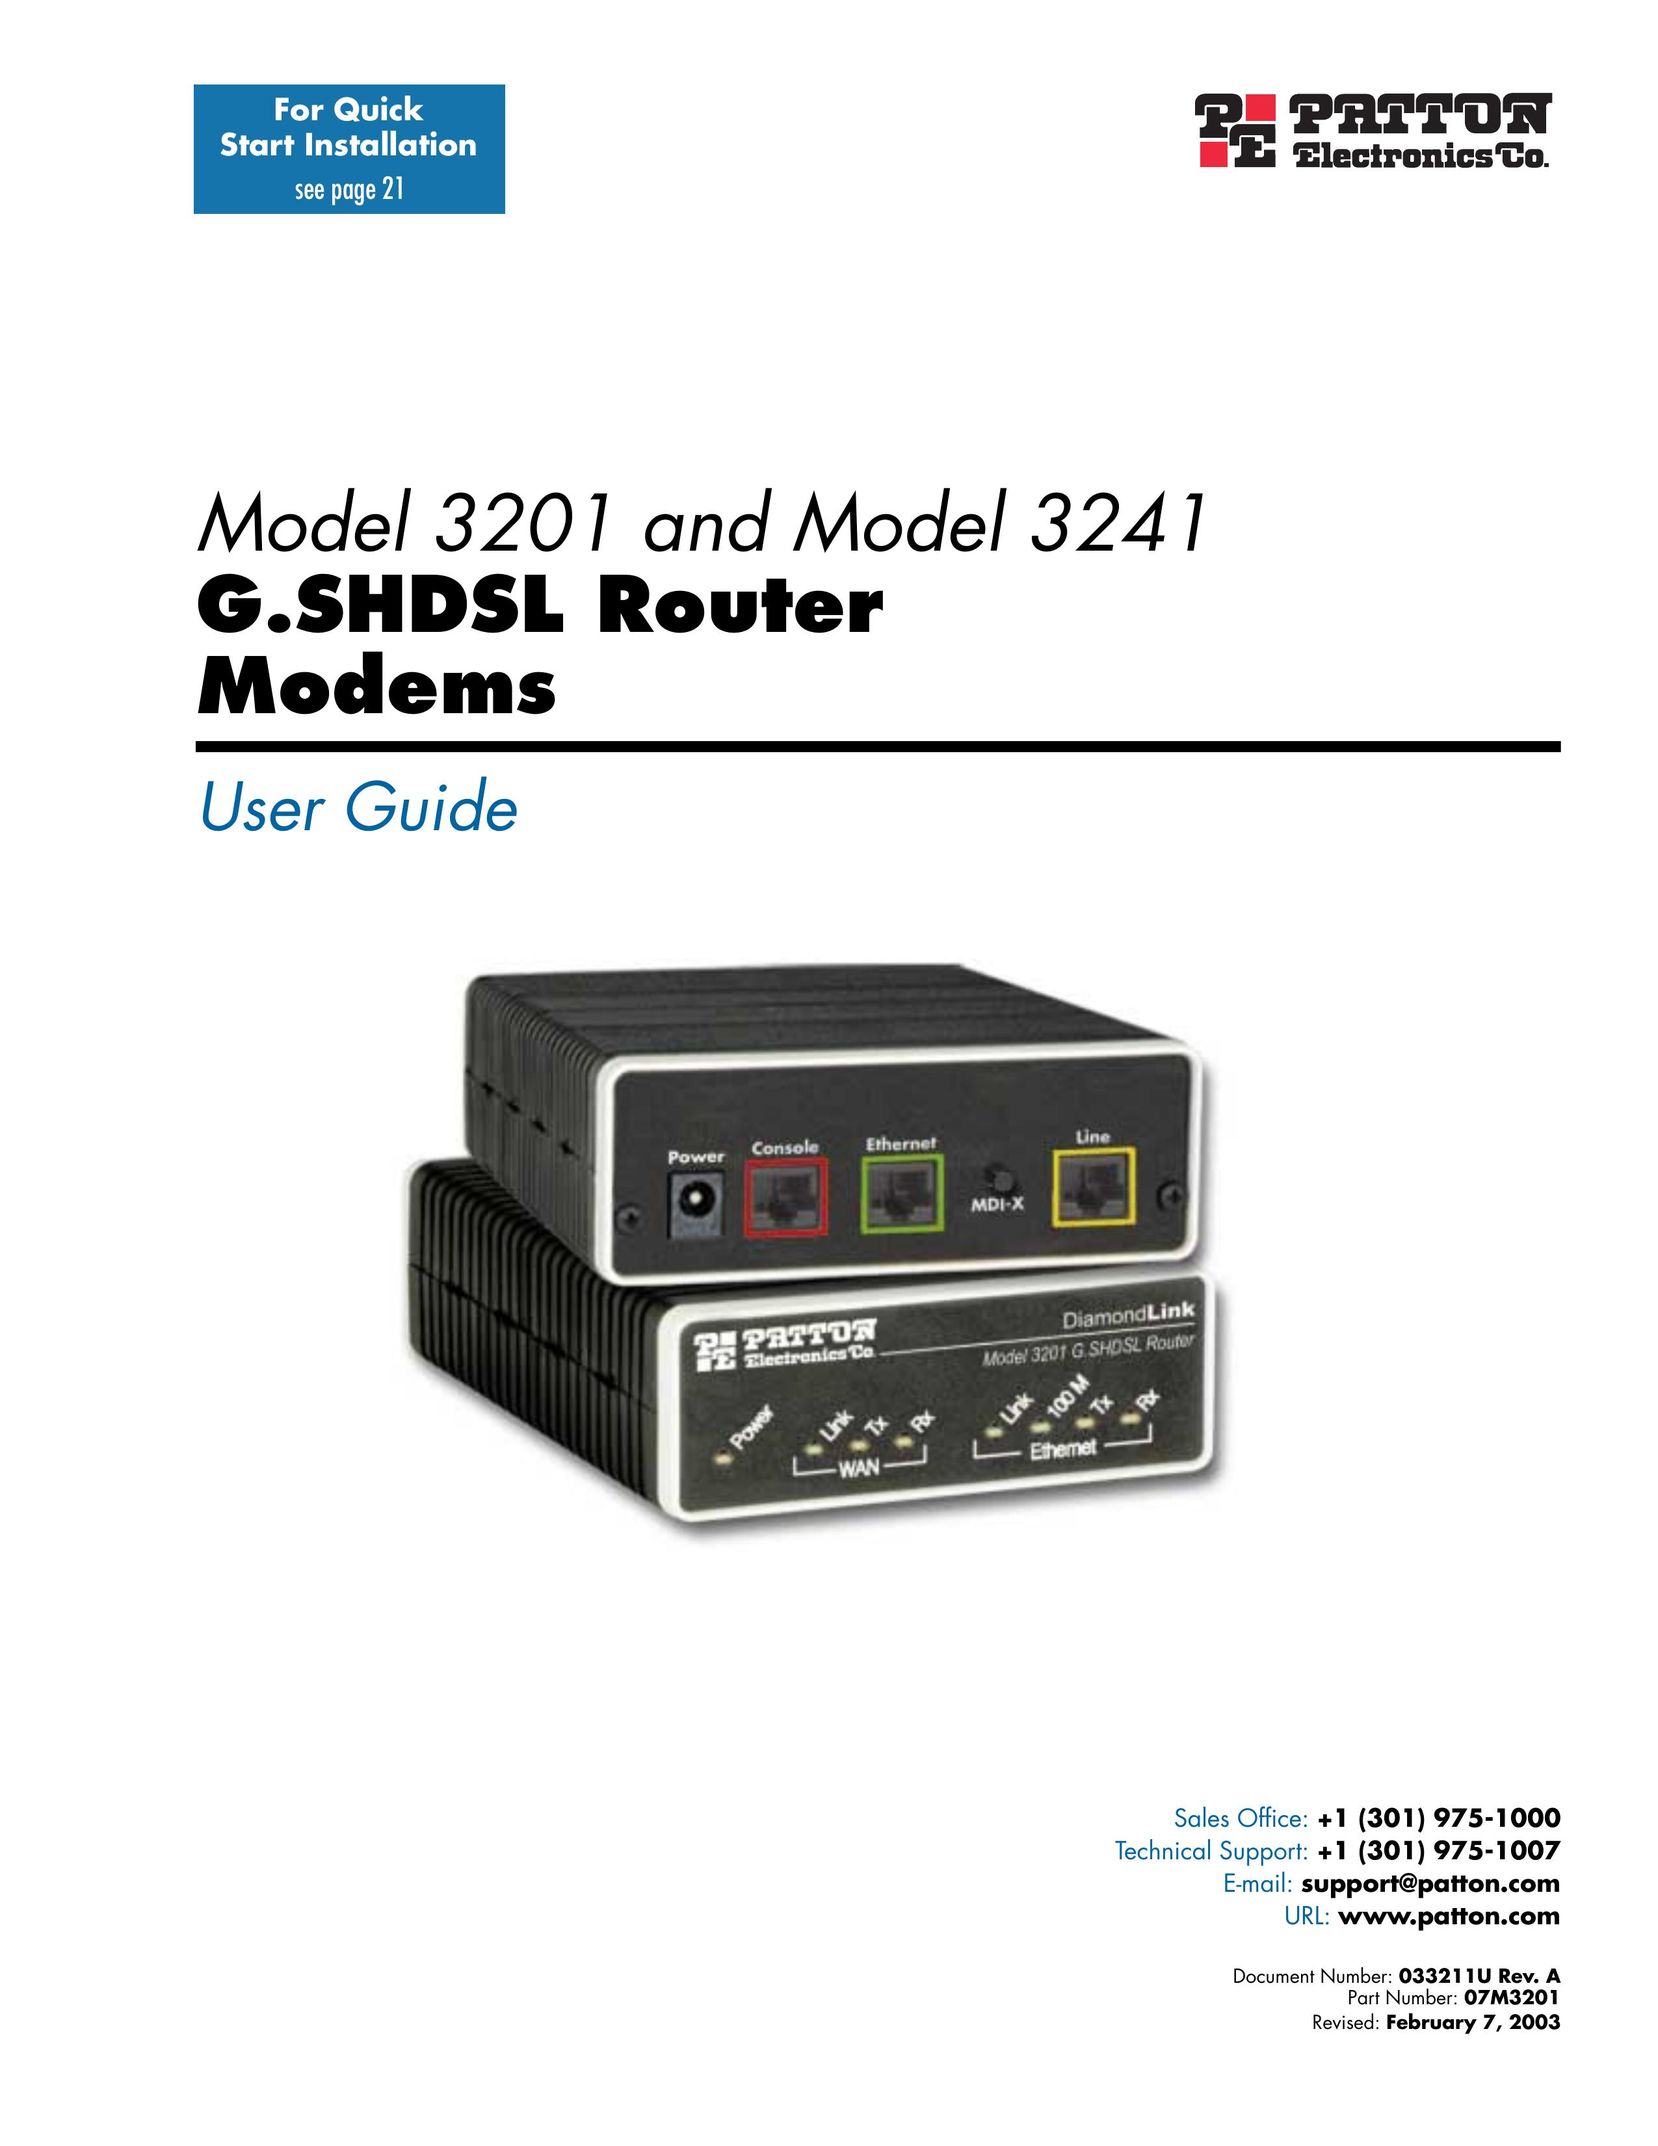 Patton electronic 3241 Modem User Manual